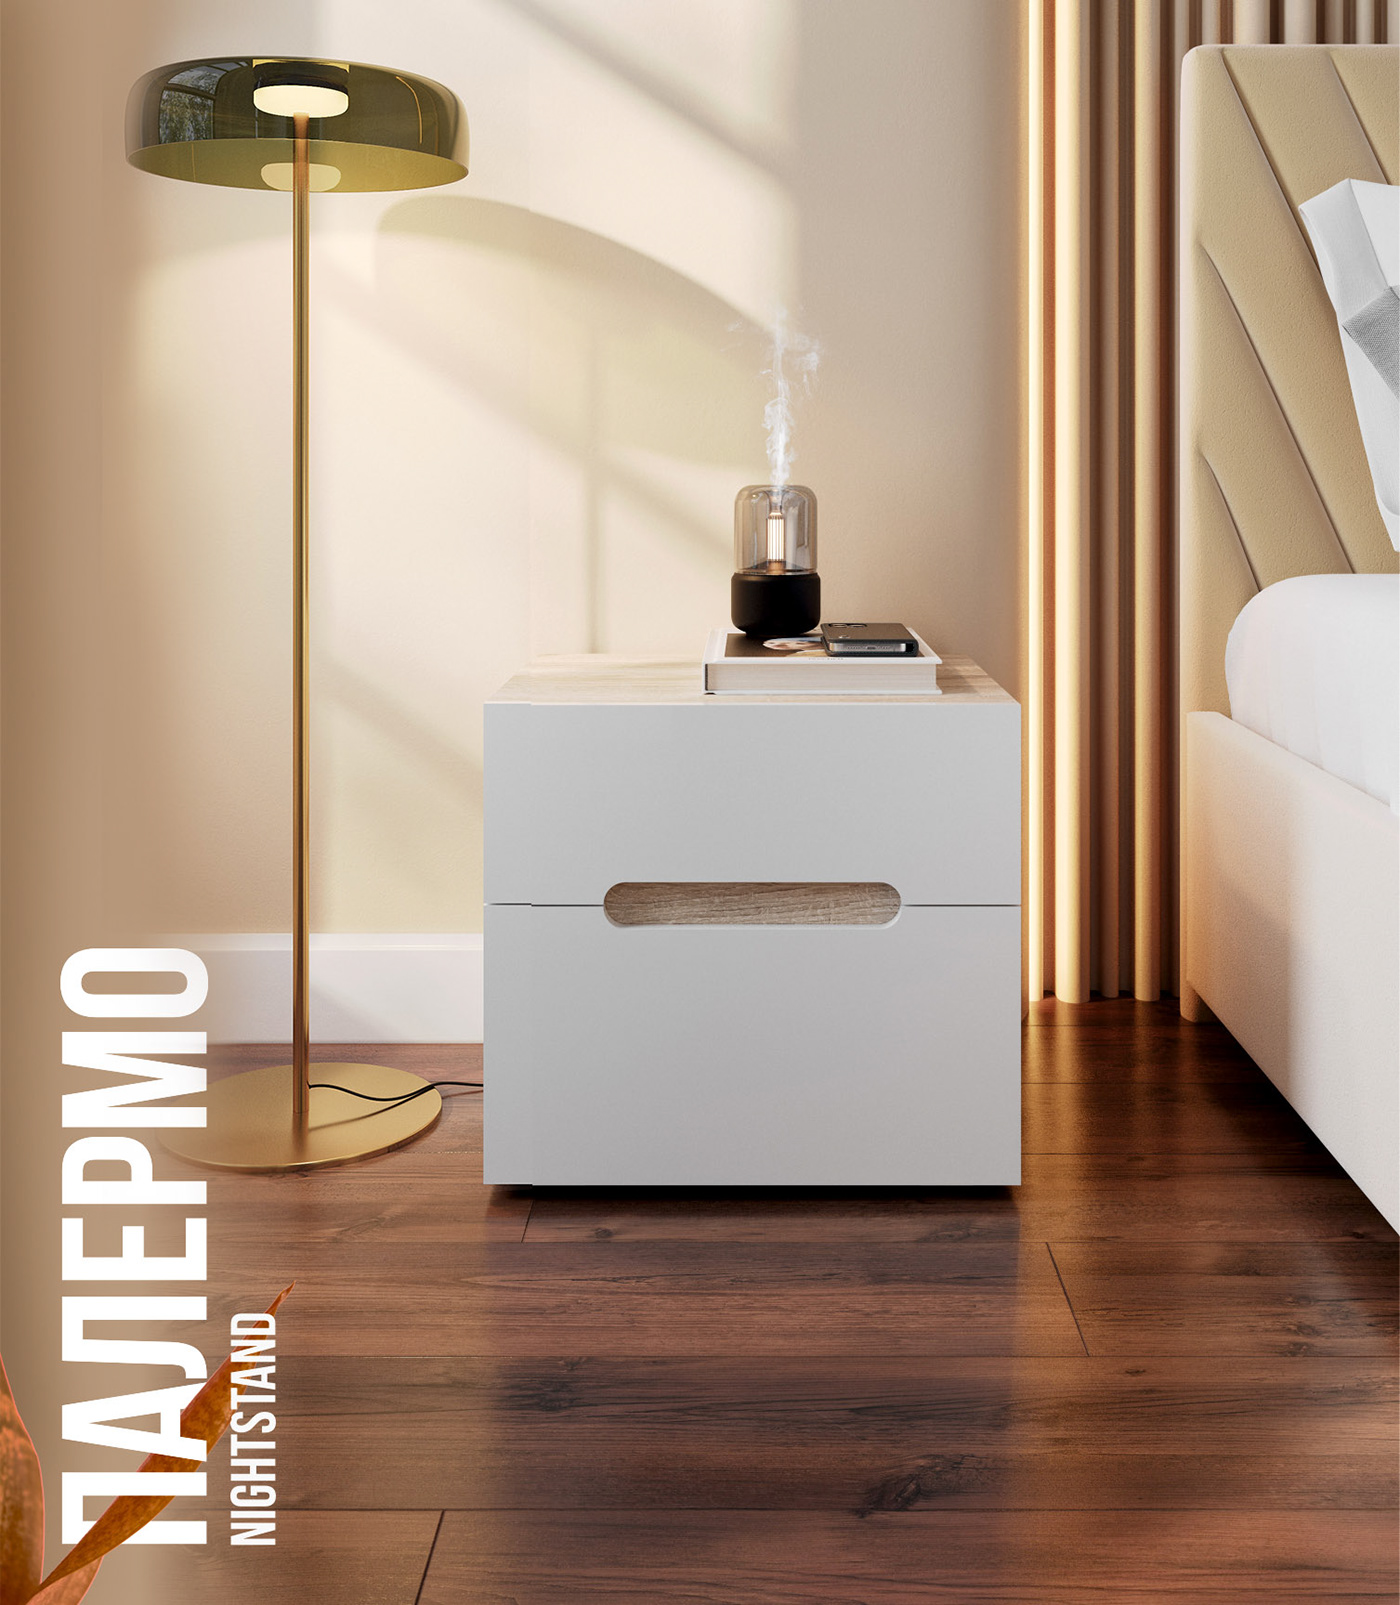 furniture interior design  Render 3ds max visualization bedroom спальня мебель дизайн интерьера интерьер